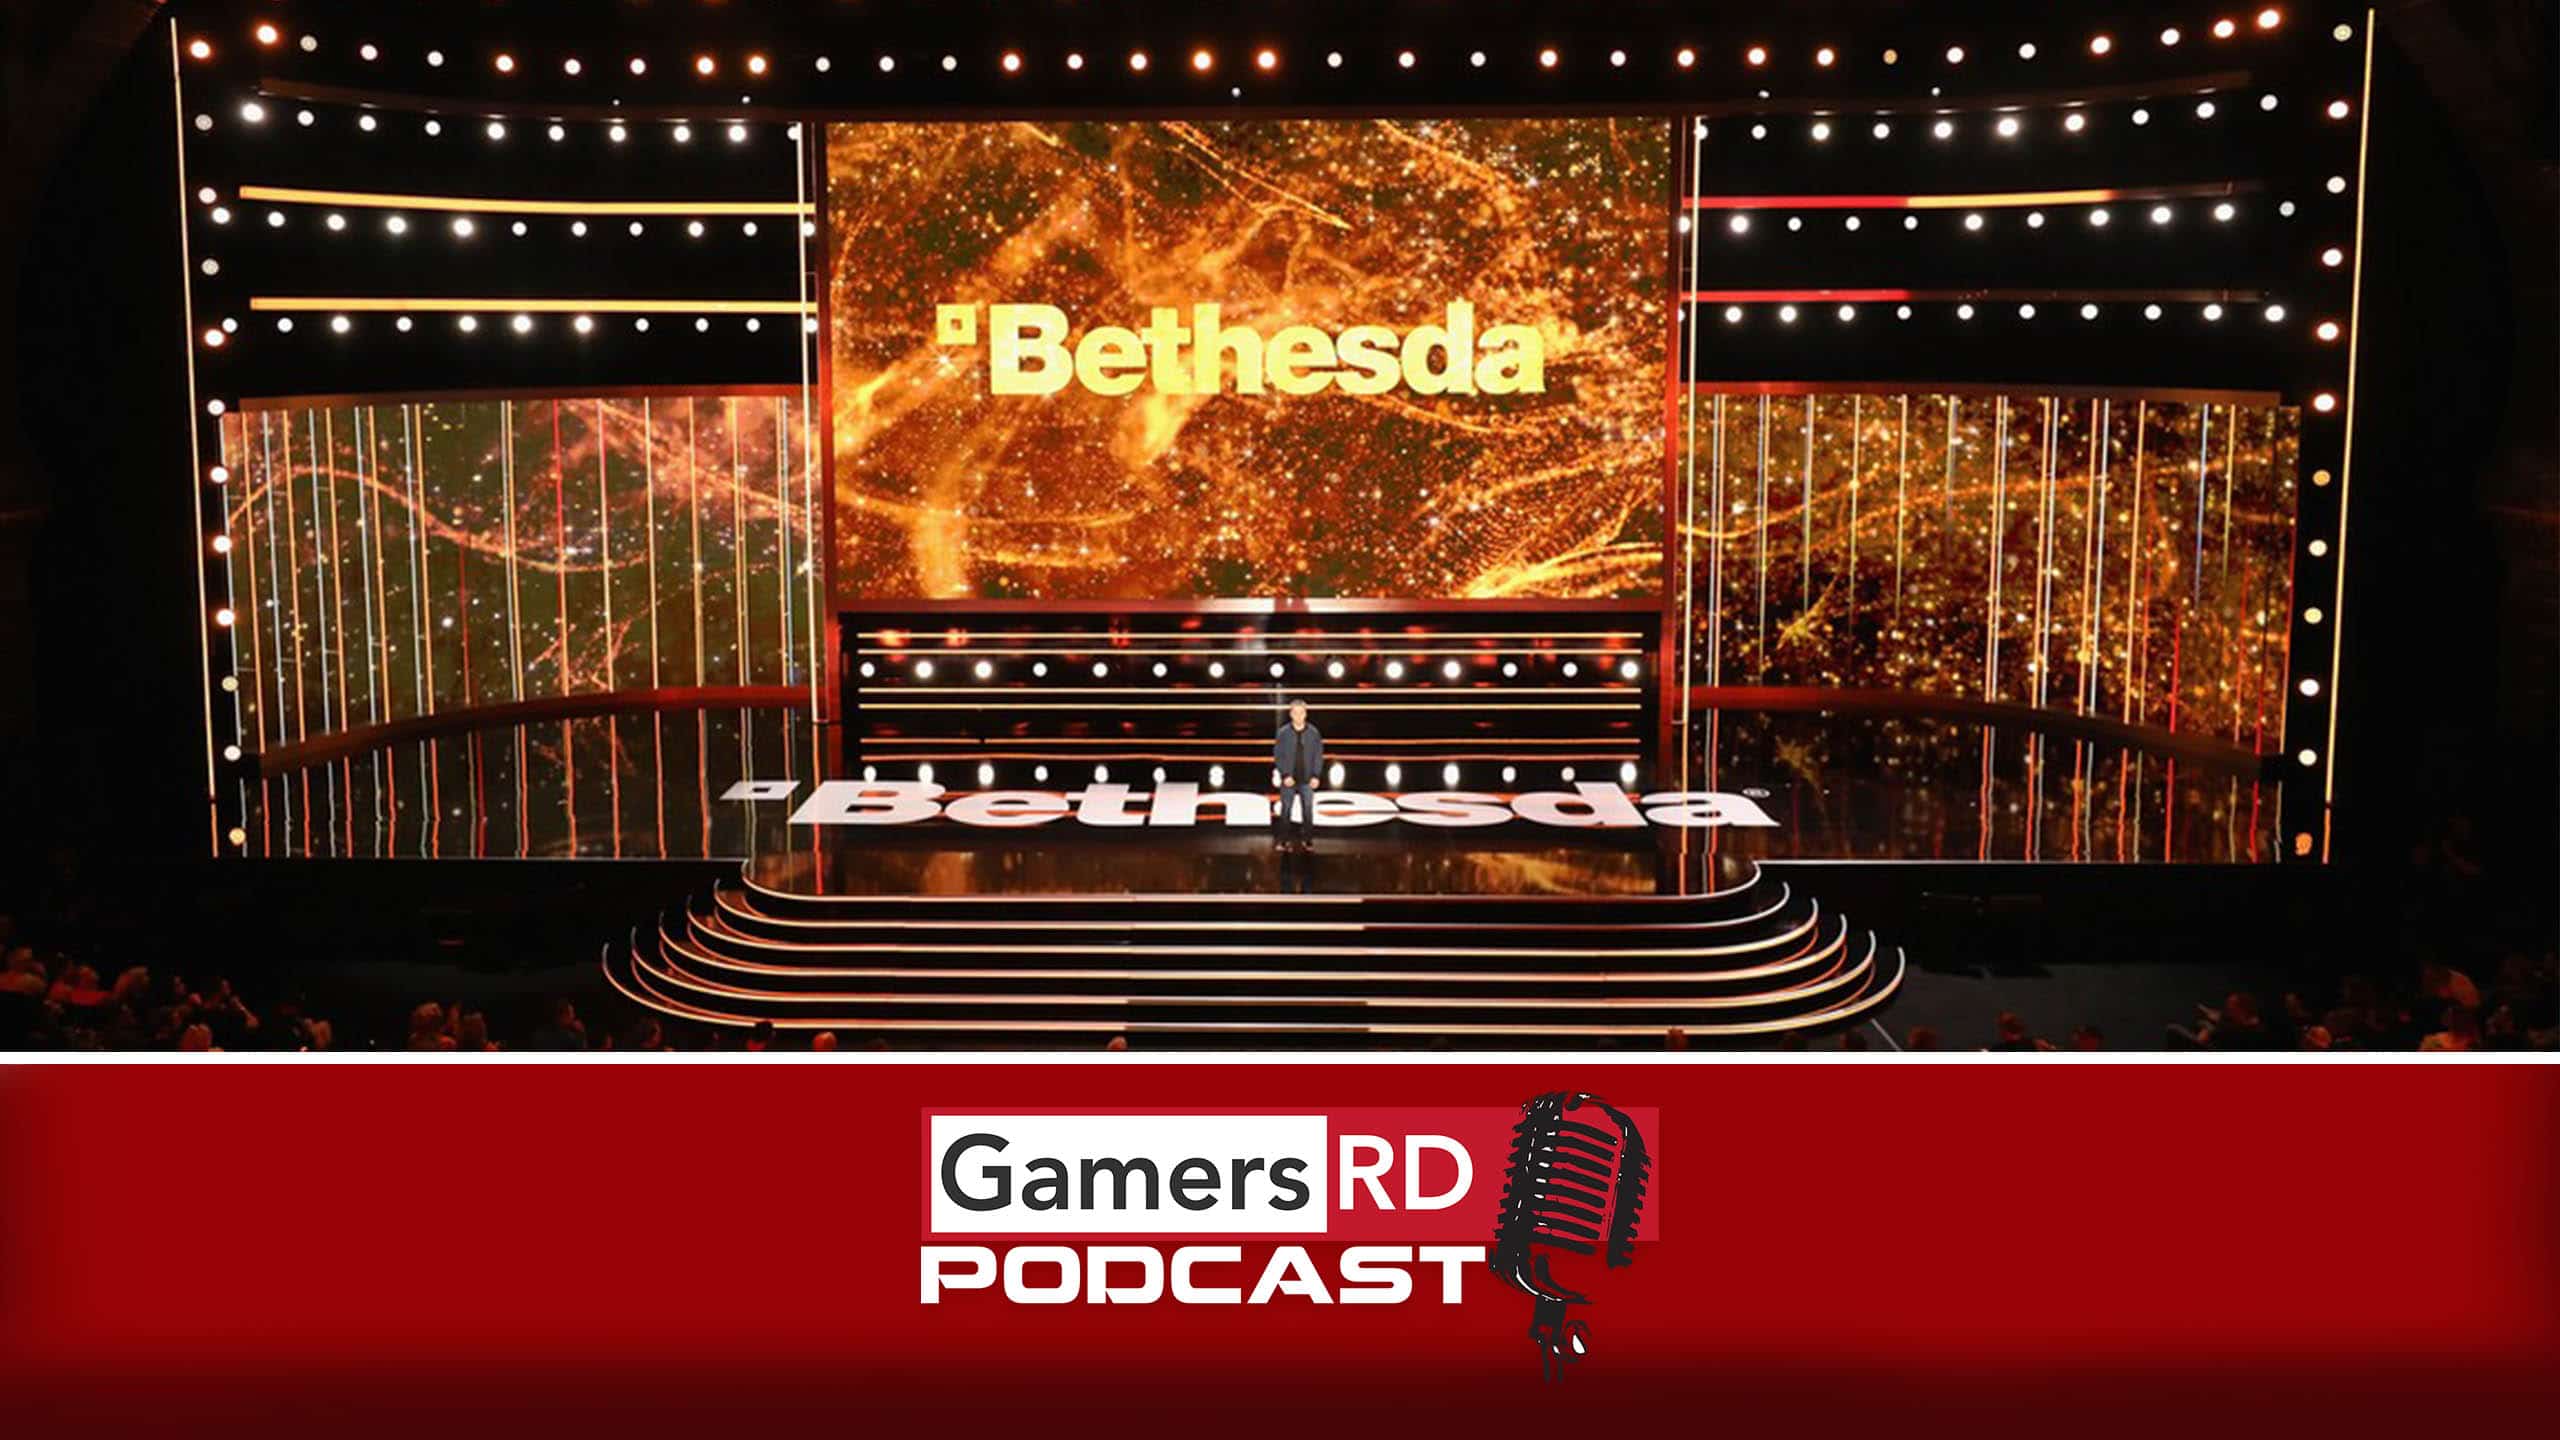 GamersRD Podcast #74 Bethesda